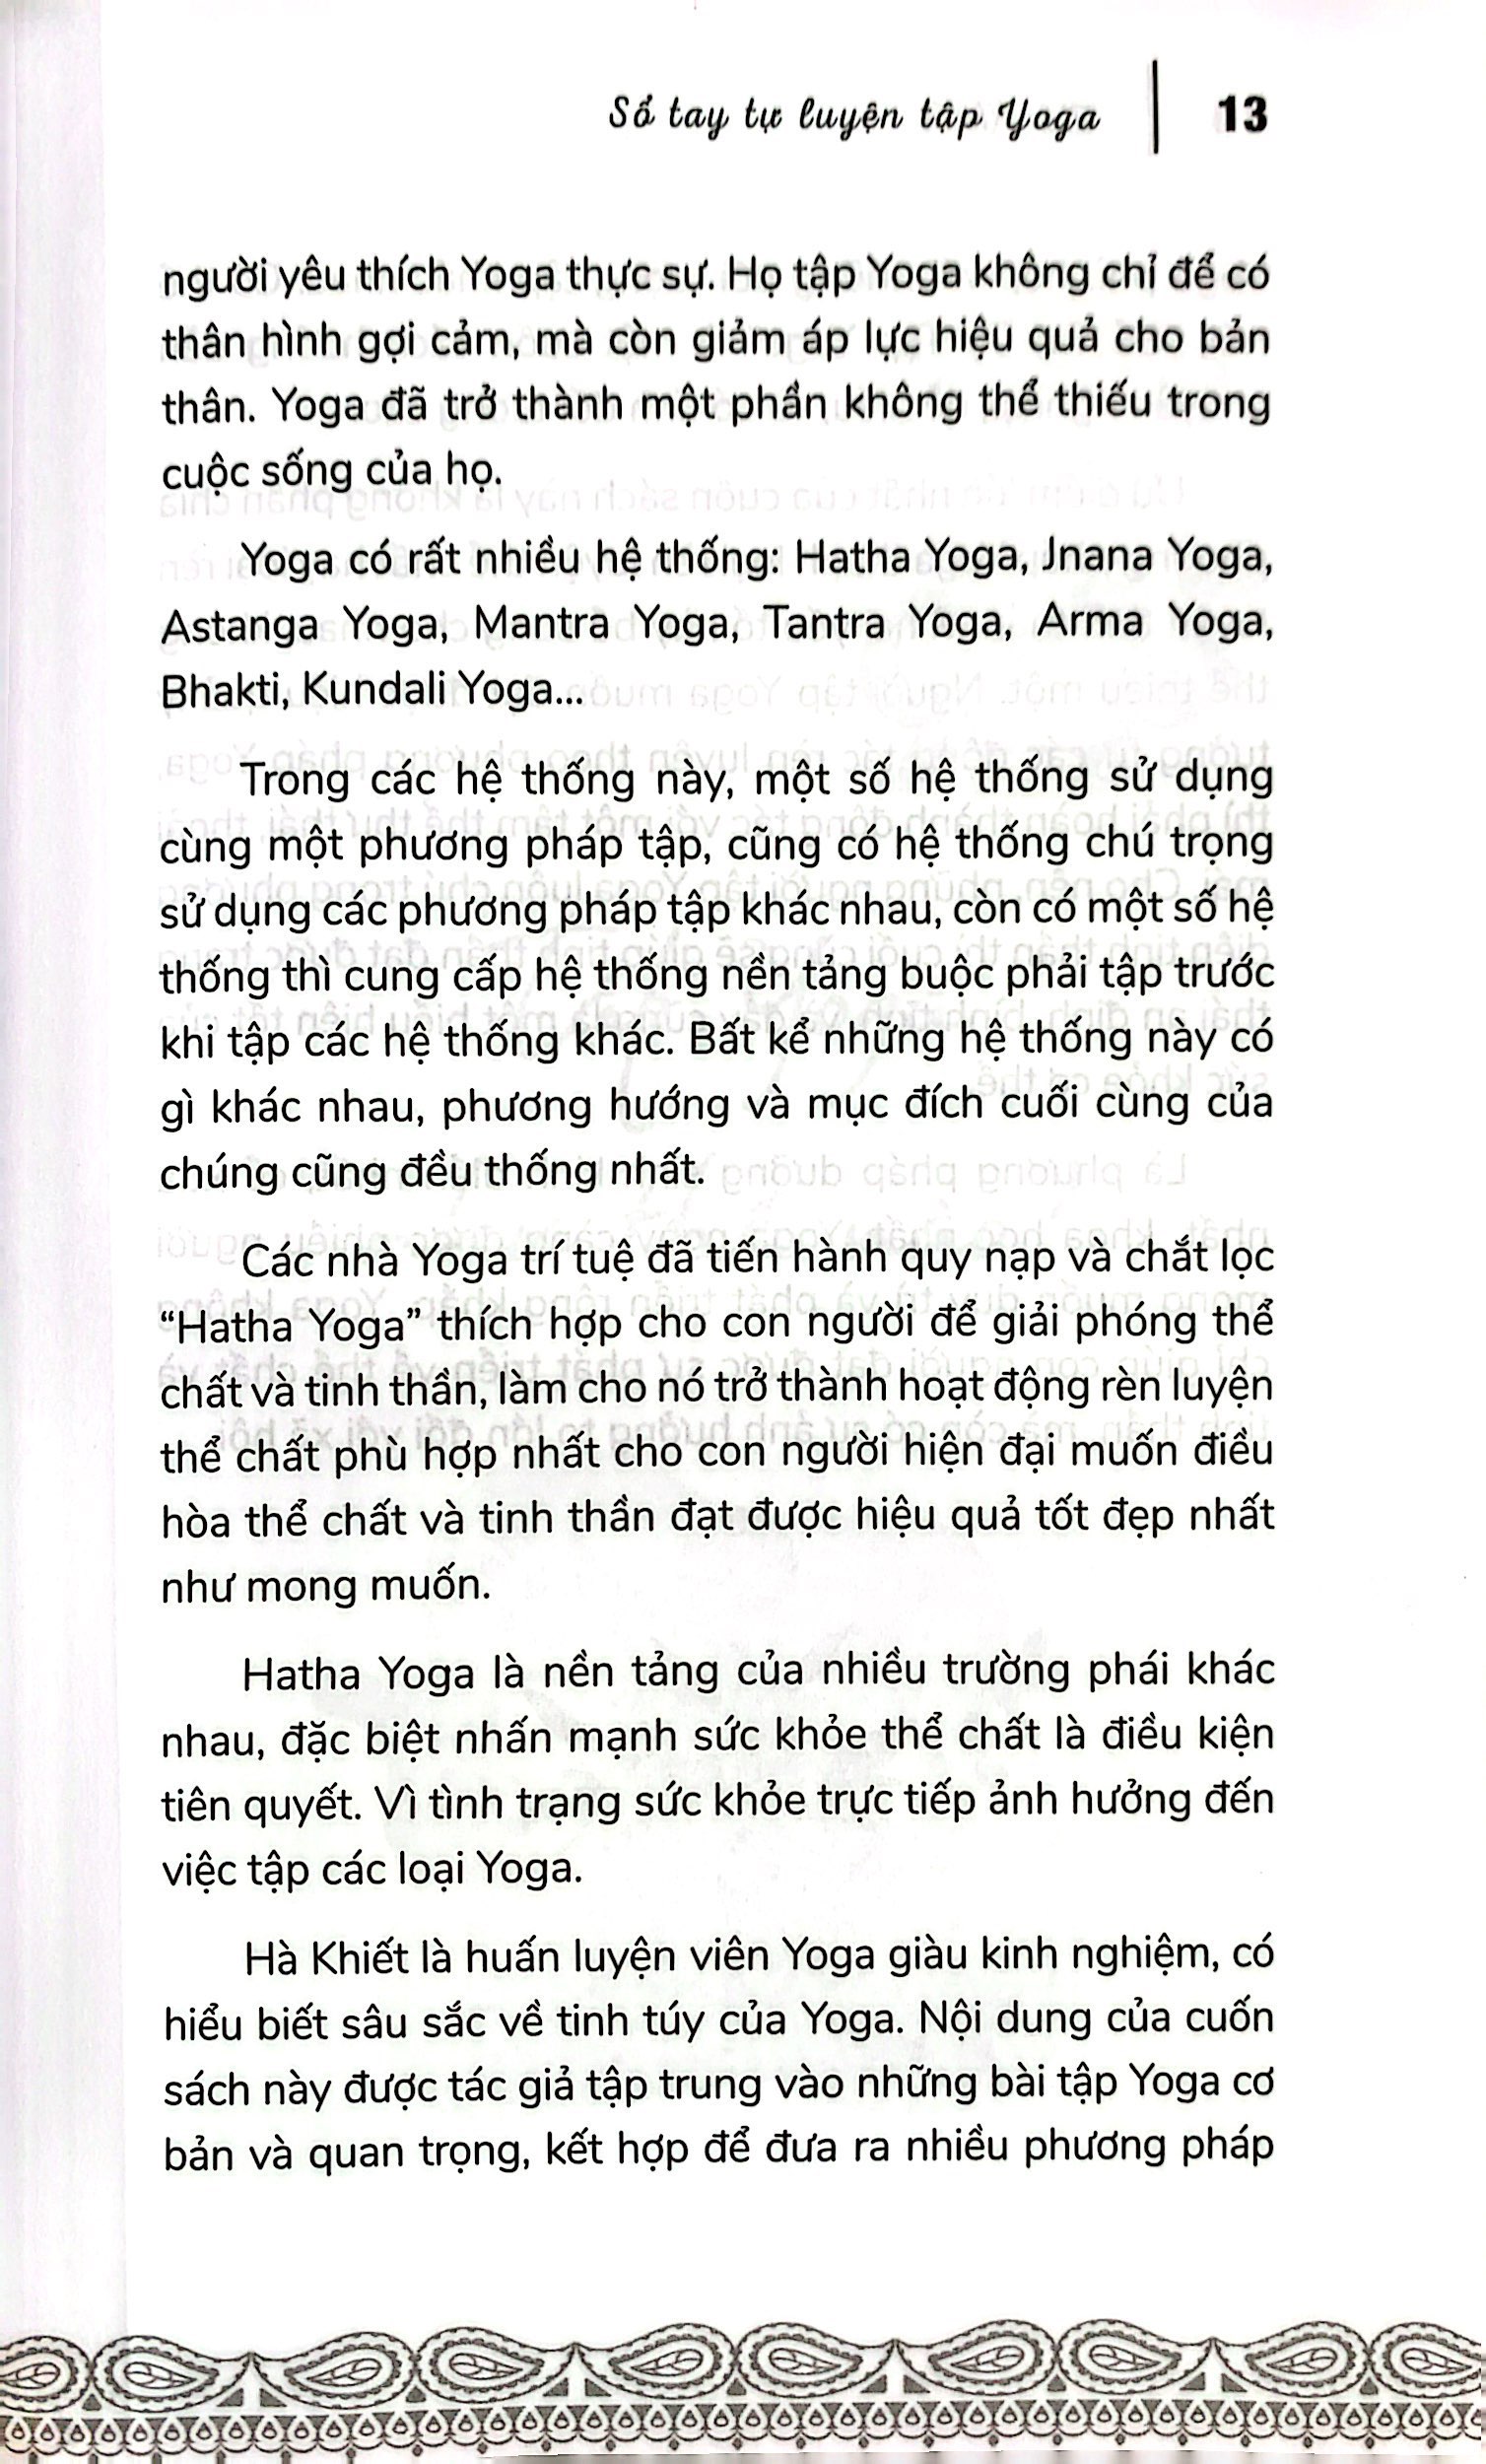 Sổ Tay Tự Luyện Tập Yoga PDF